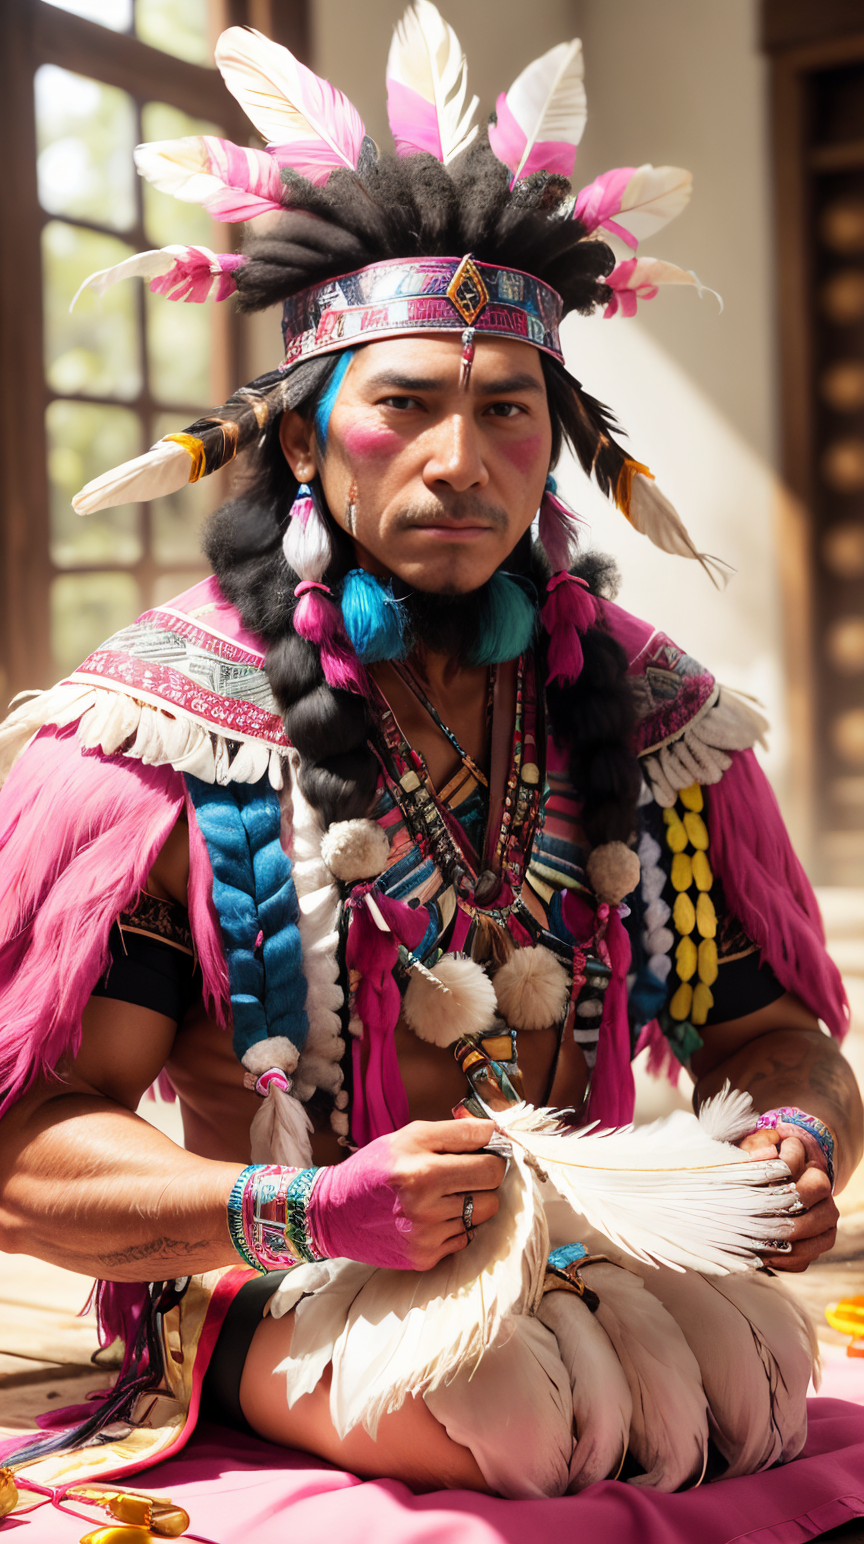 <lora:BarbieCore:0.8> BarbieCore a Native American chief adorned in feathers preparing for a sacred ritual, (shiny plastic...